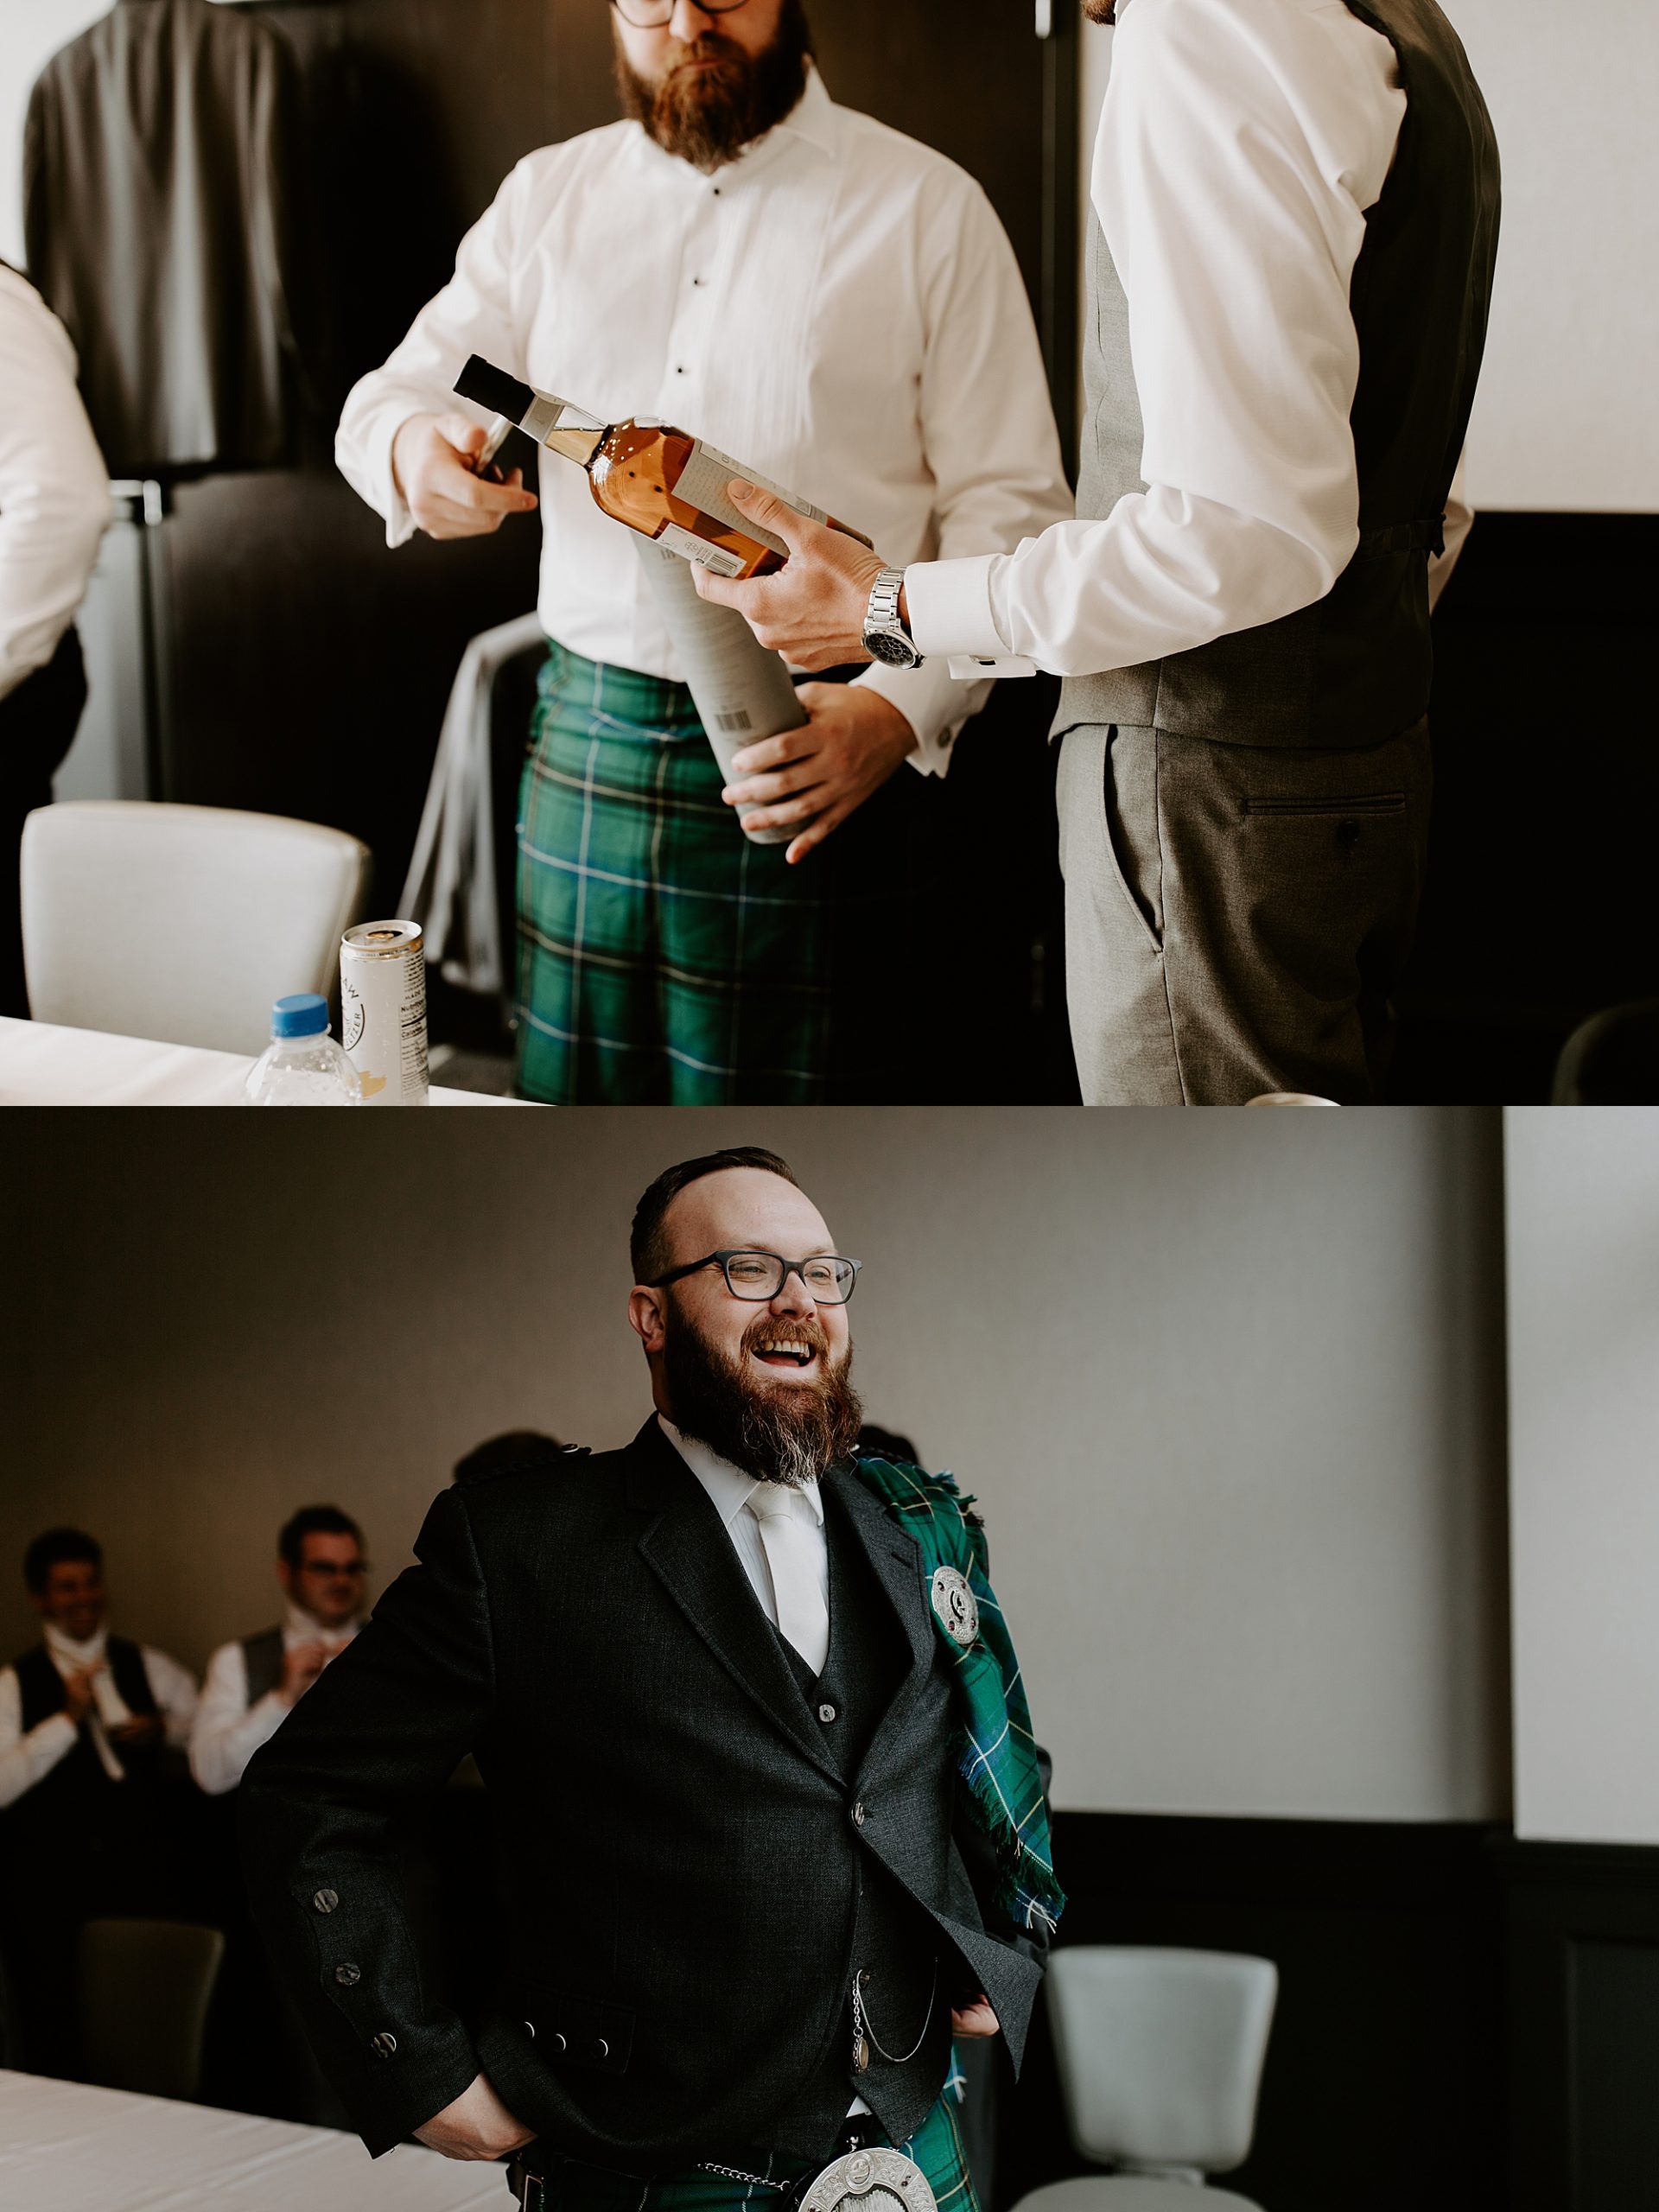 Scottish wedding attire